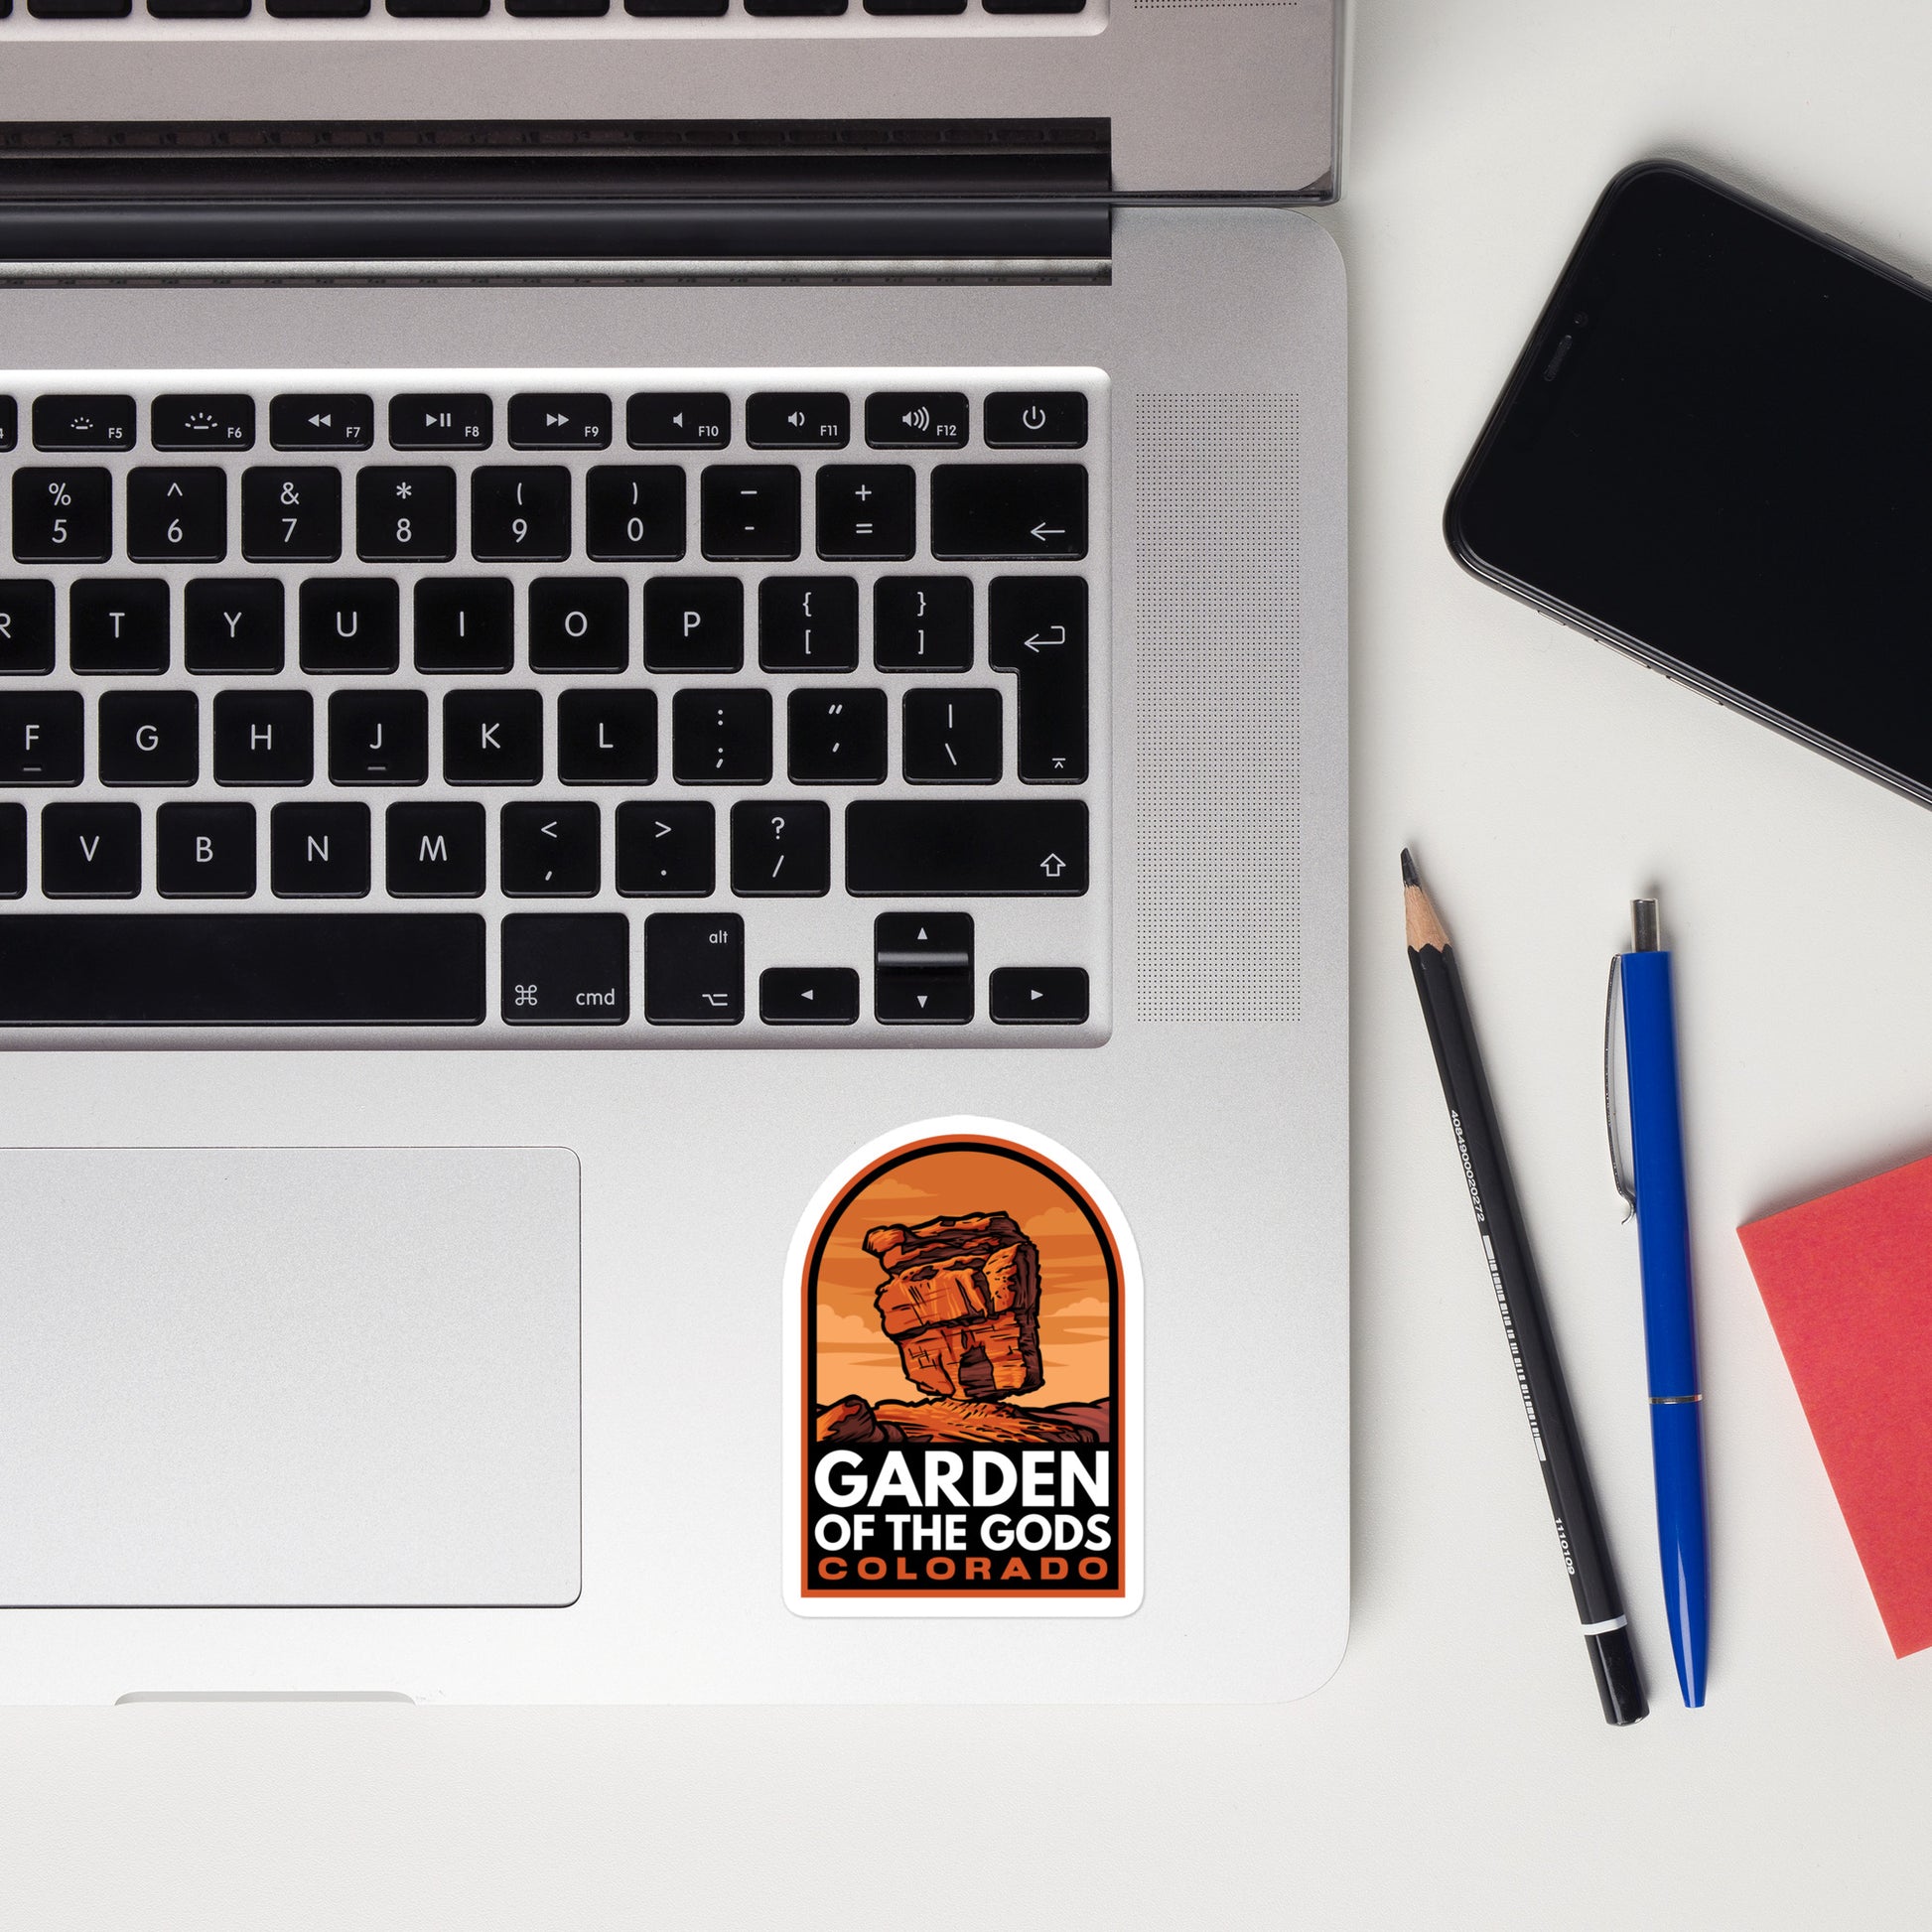 A sticker of Garden of the Gods Colorado on a laptop